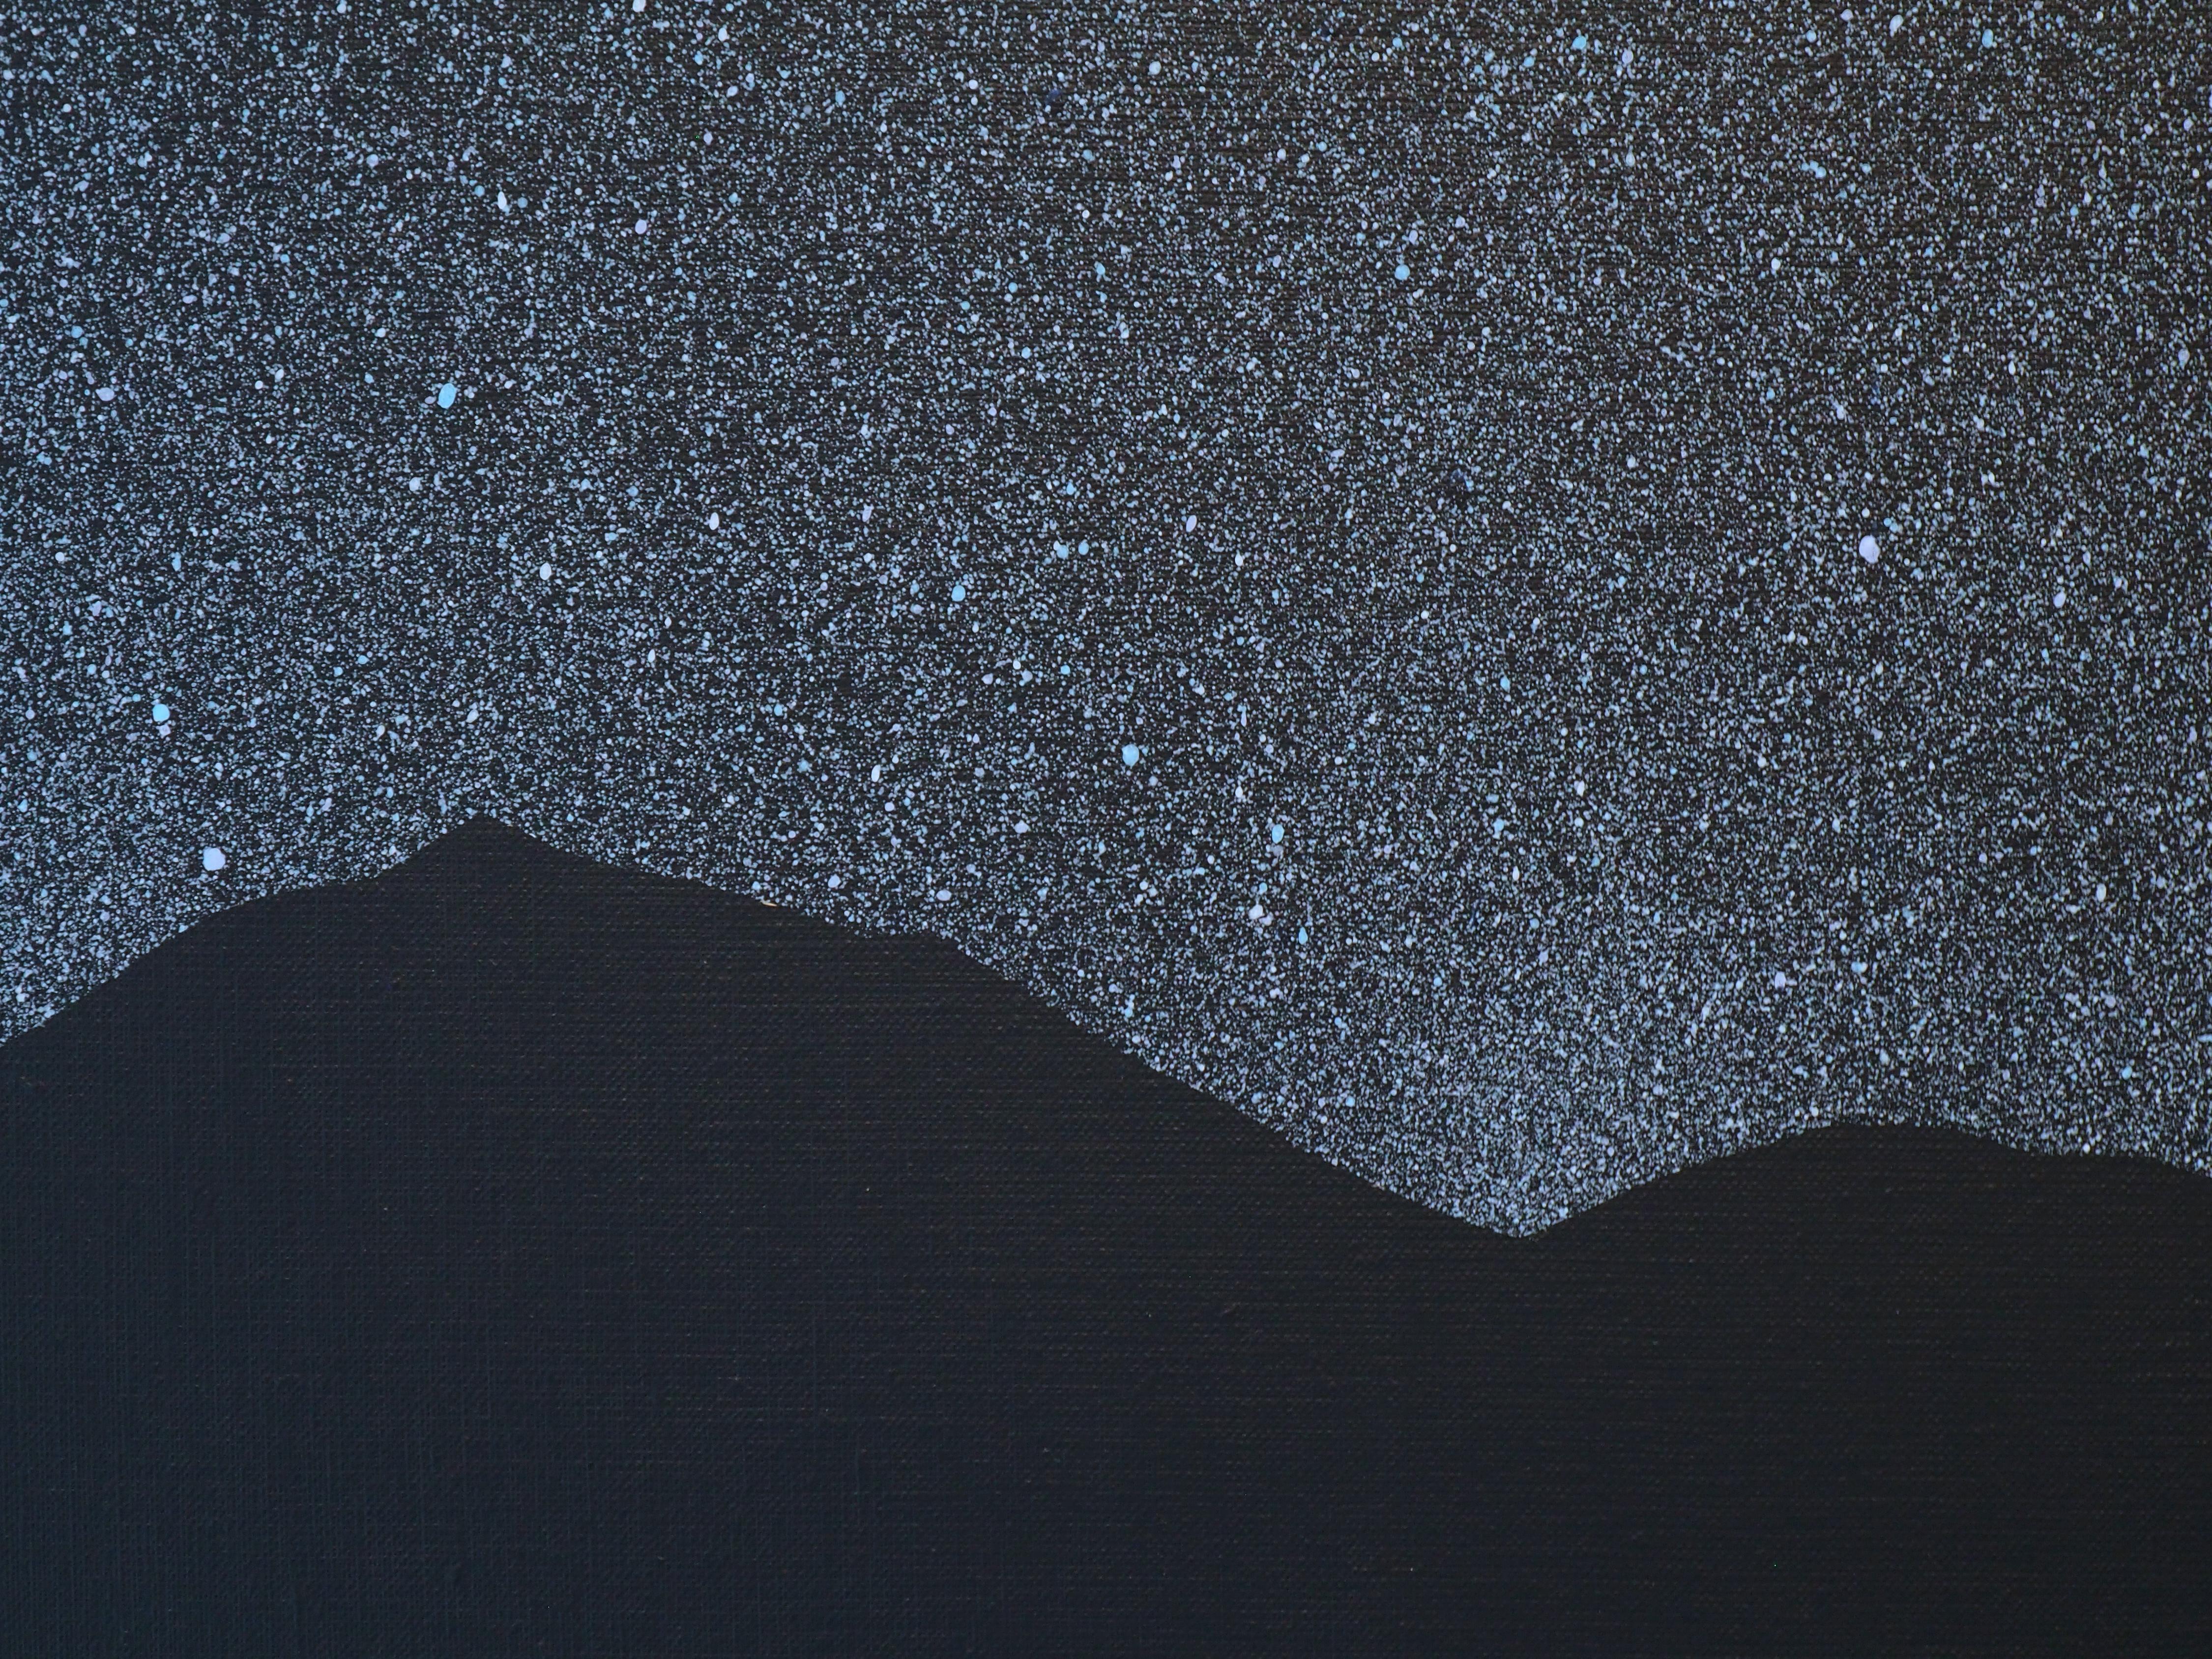 Stars 14 October 00:23, Modern Night Sky Landscape Painting, Minimalist Art  For Sale 2